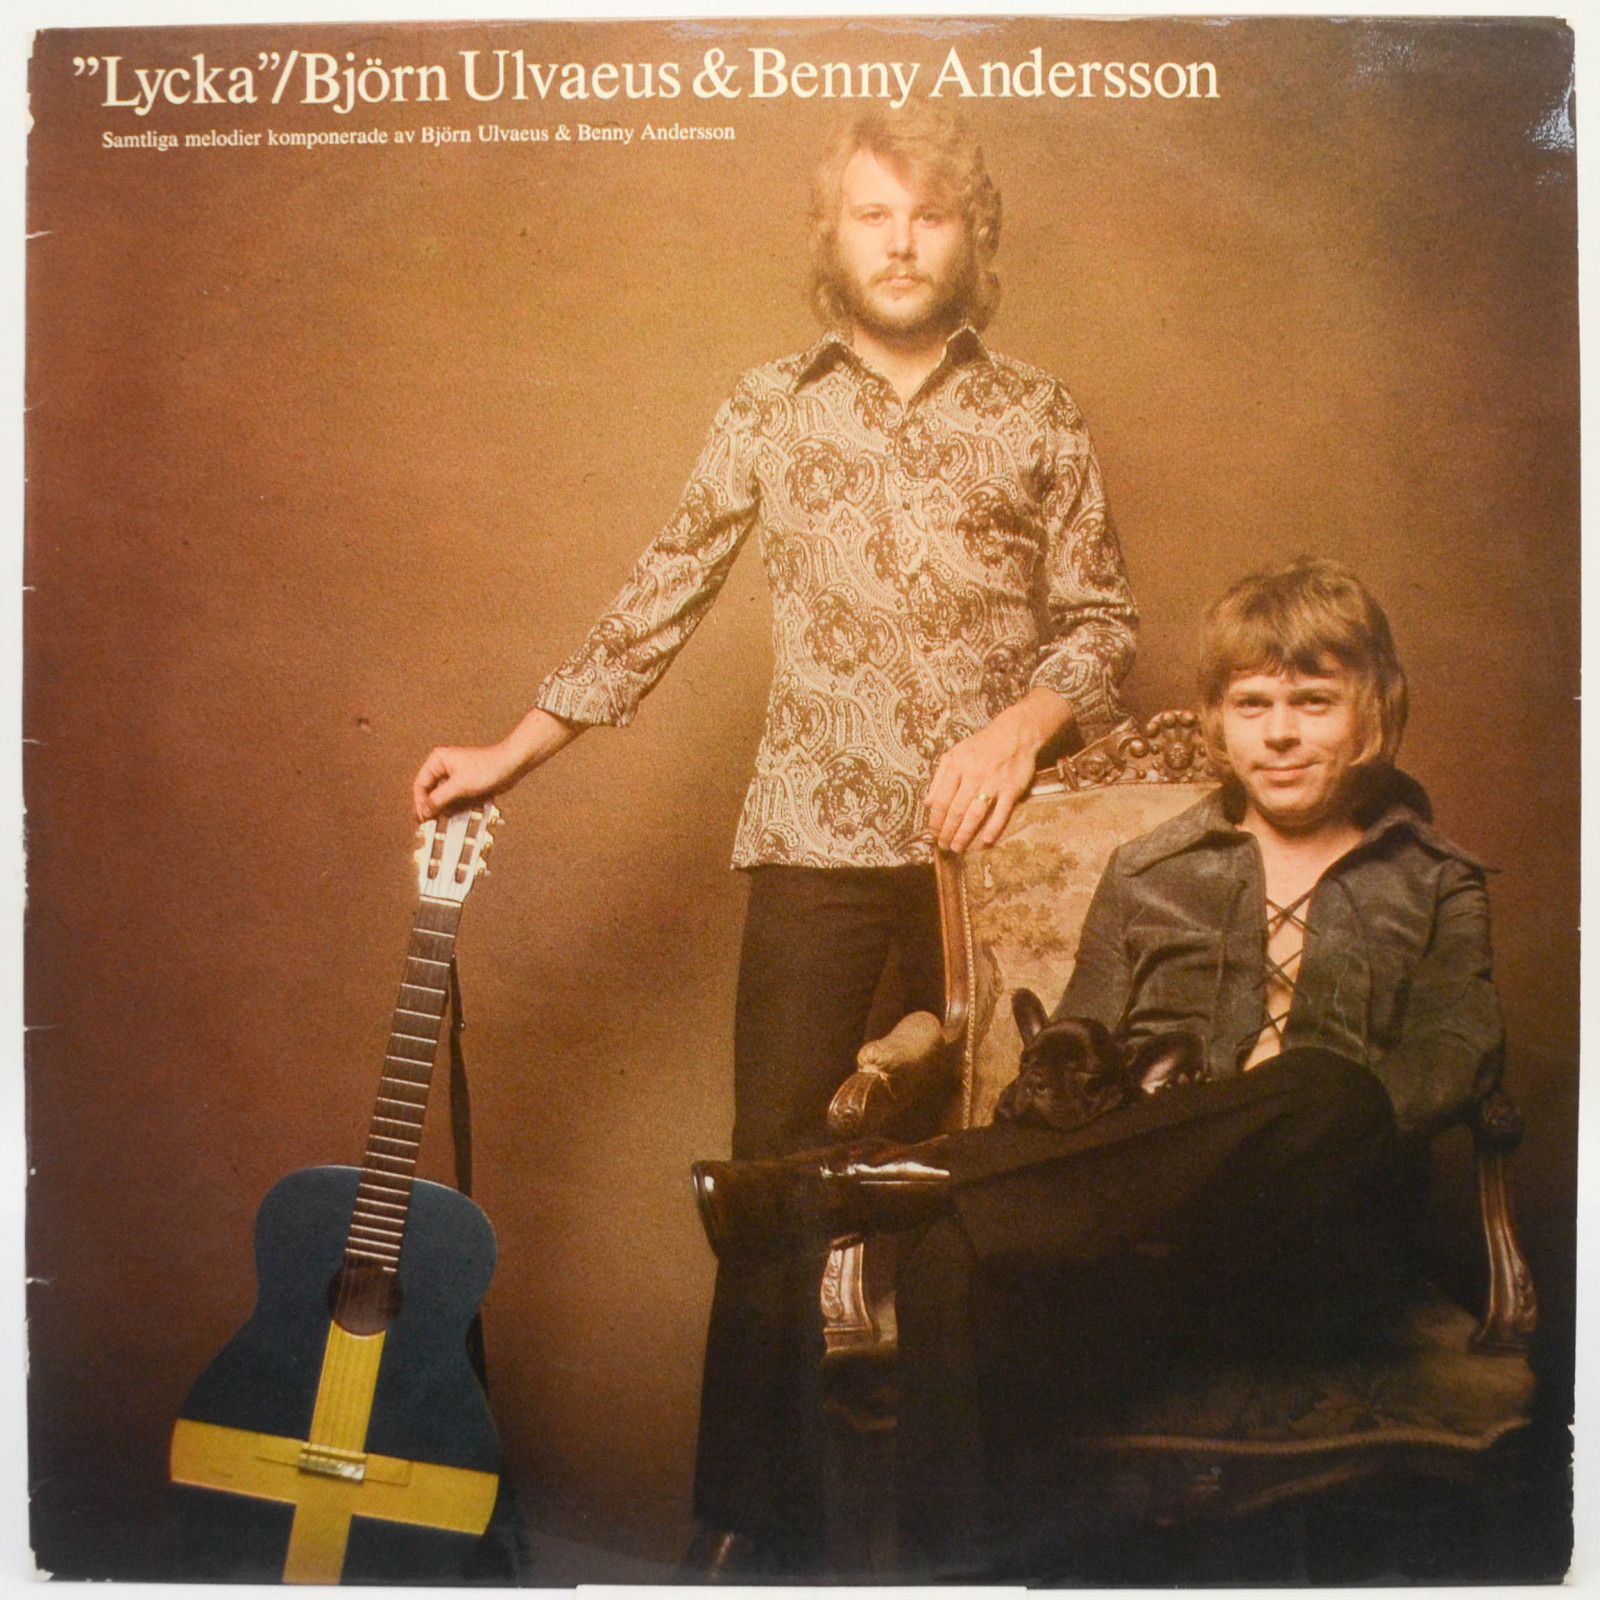 Björn Ulvaeus & Benny Andersson — "Lycka" (1-st, Sweden), 1970